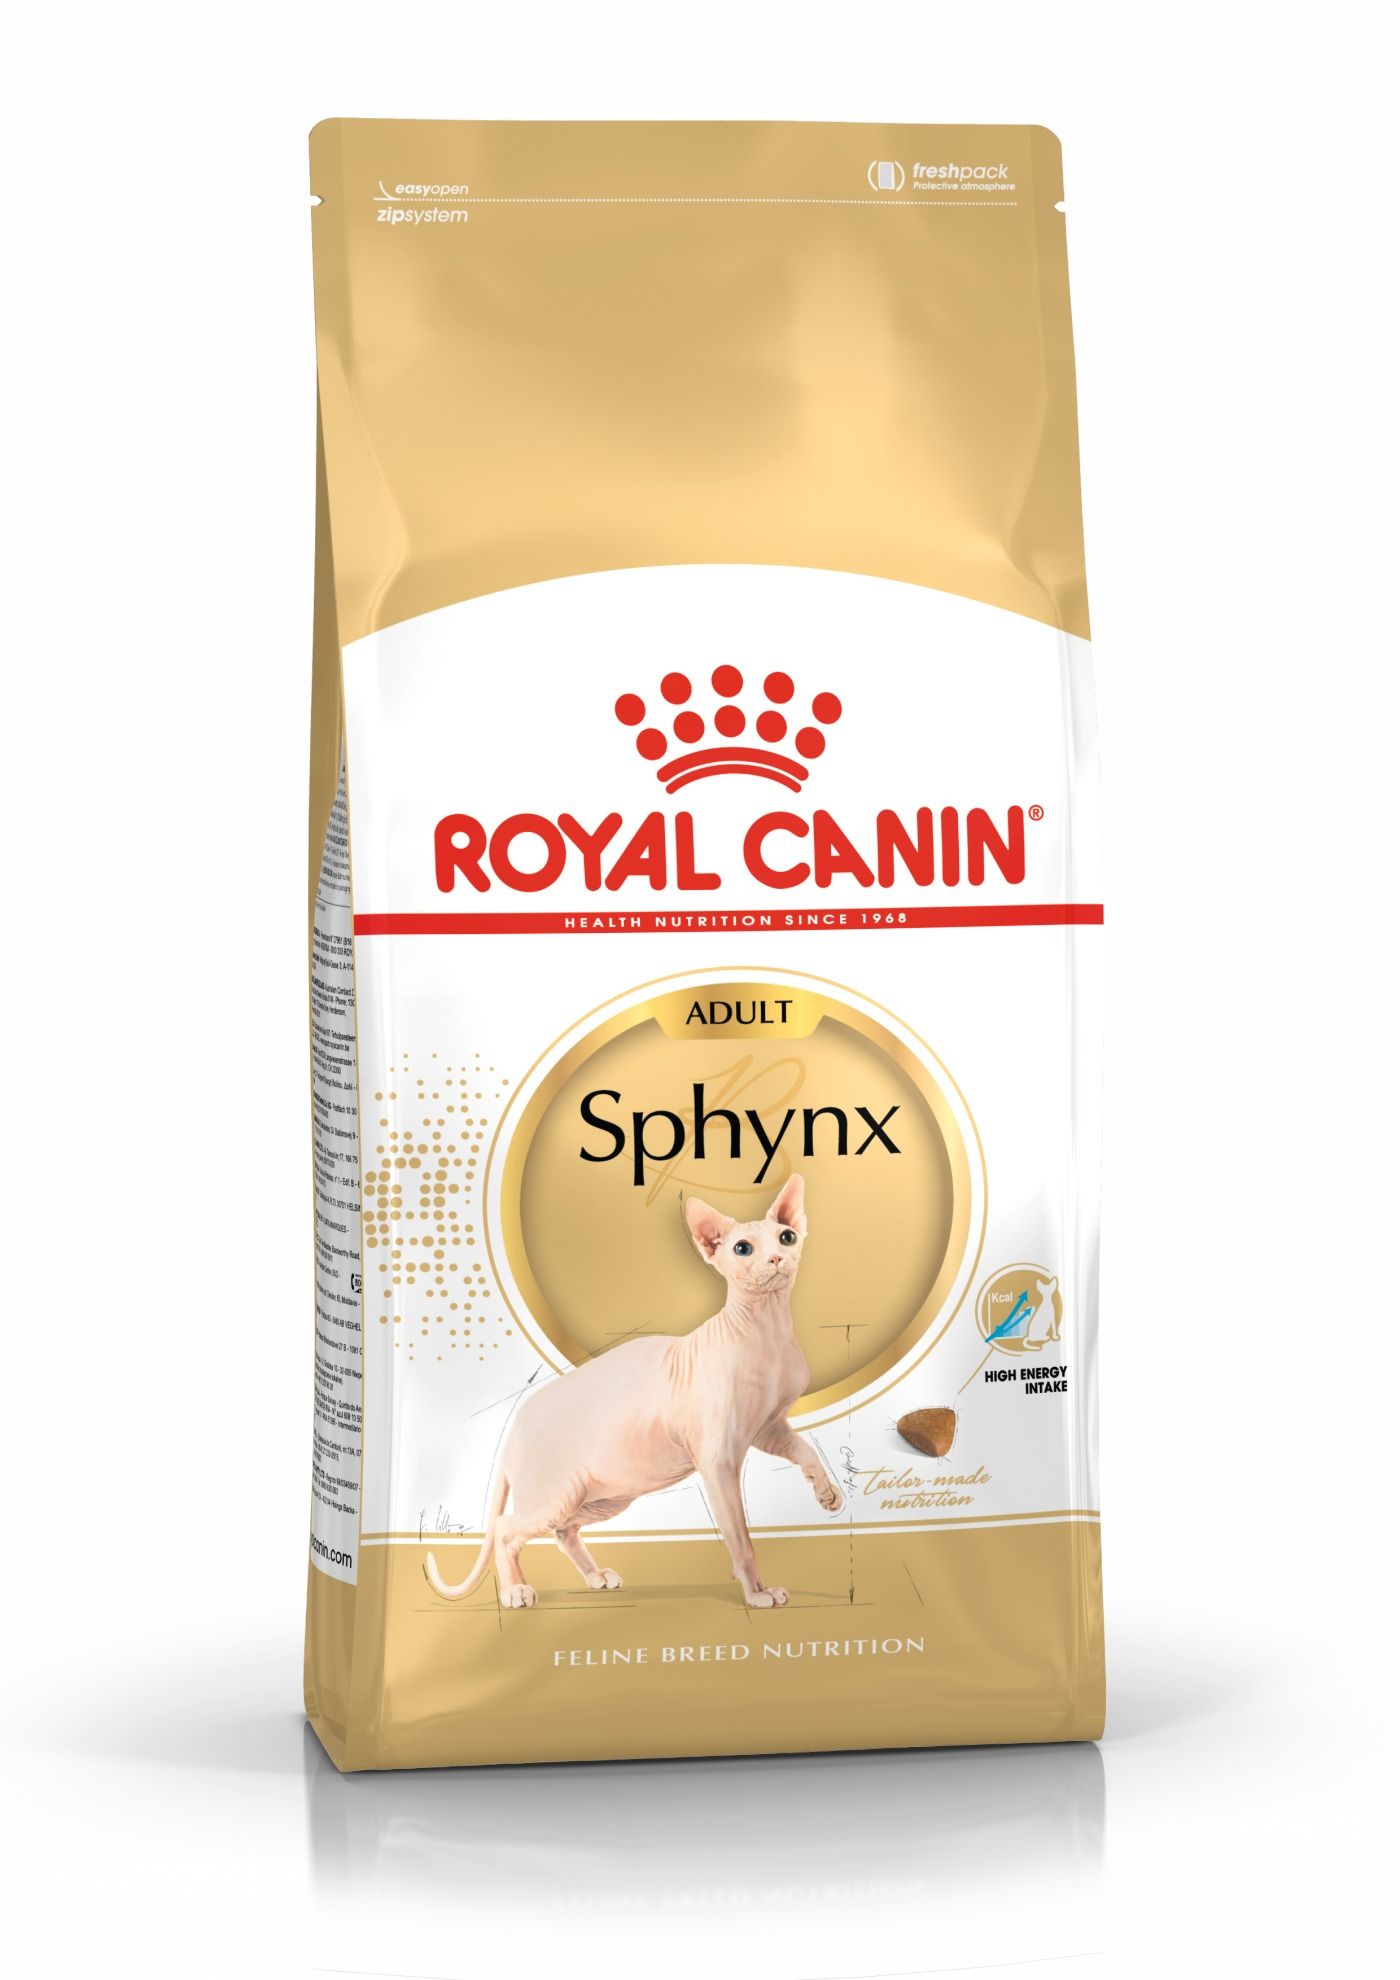 Сухой корм премиум класса Roal Canin Sphynx Adult для кошек старше 12 месяцев фото